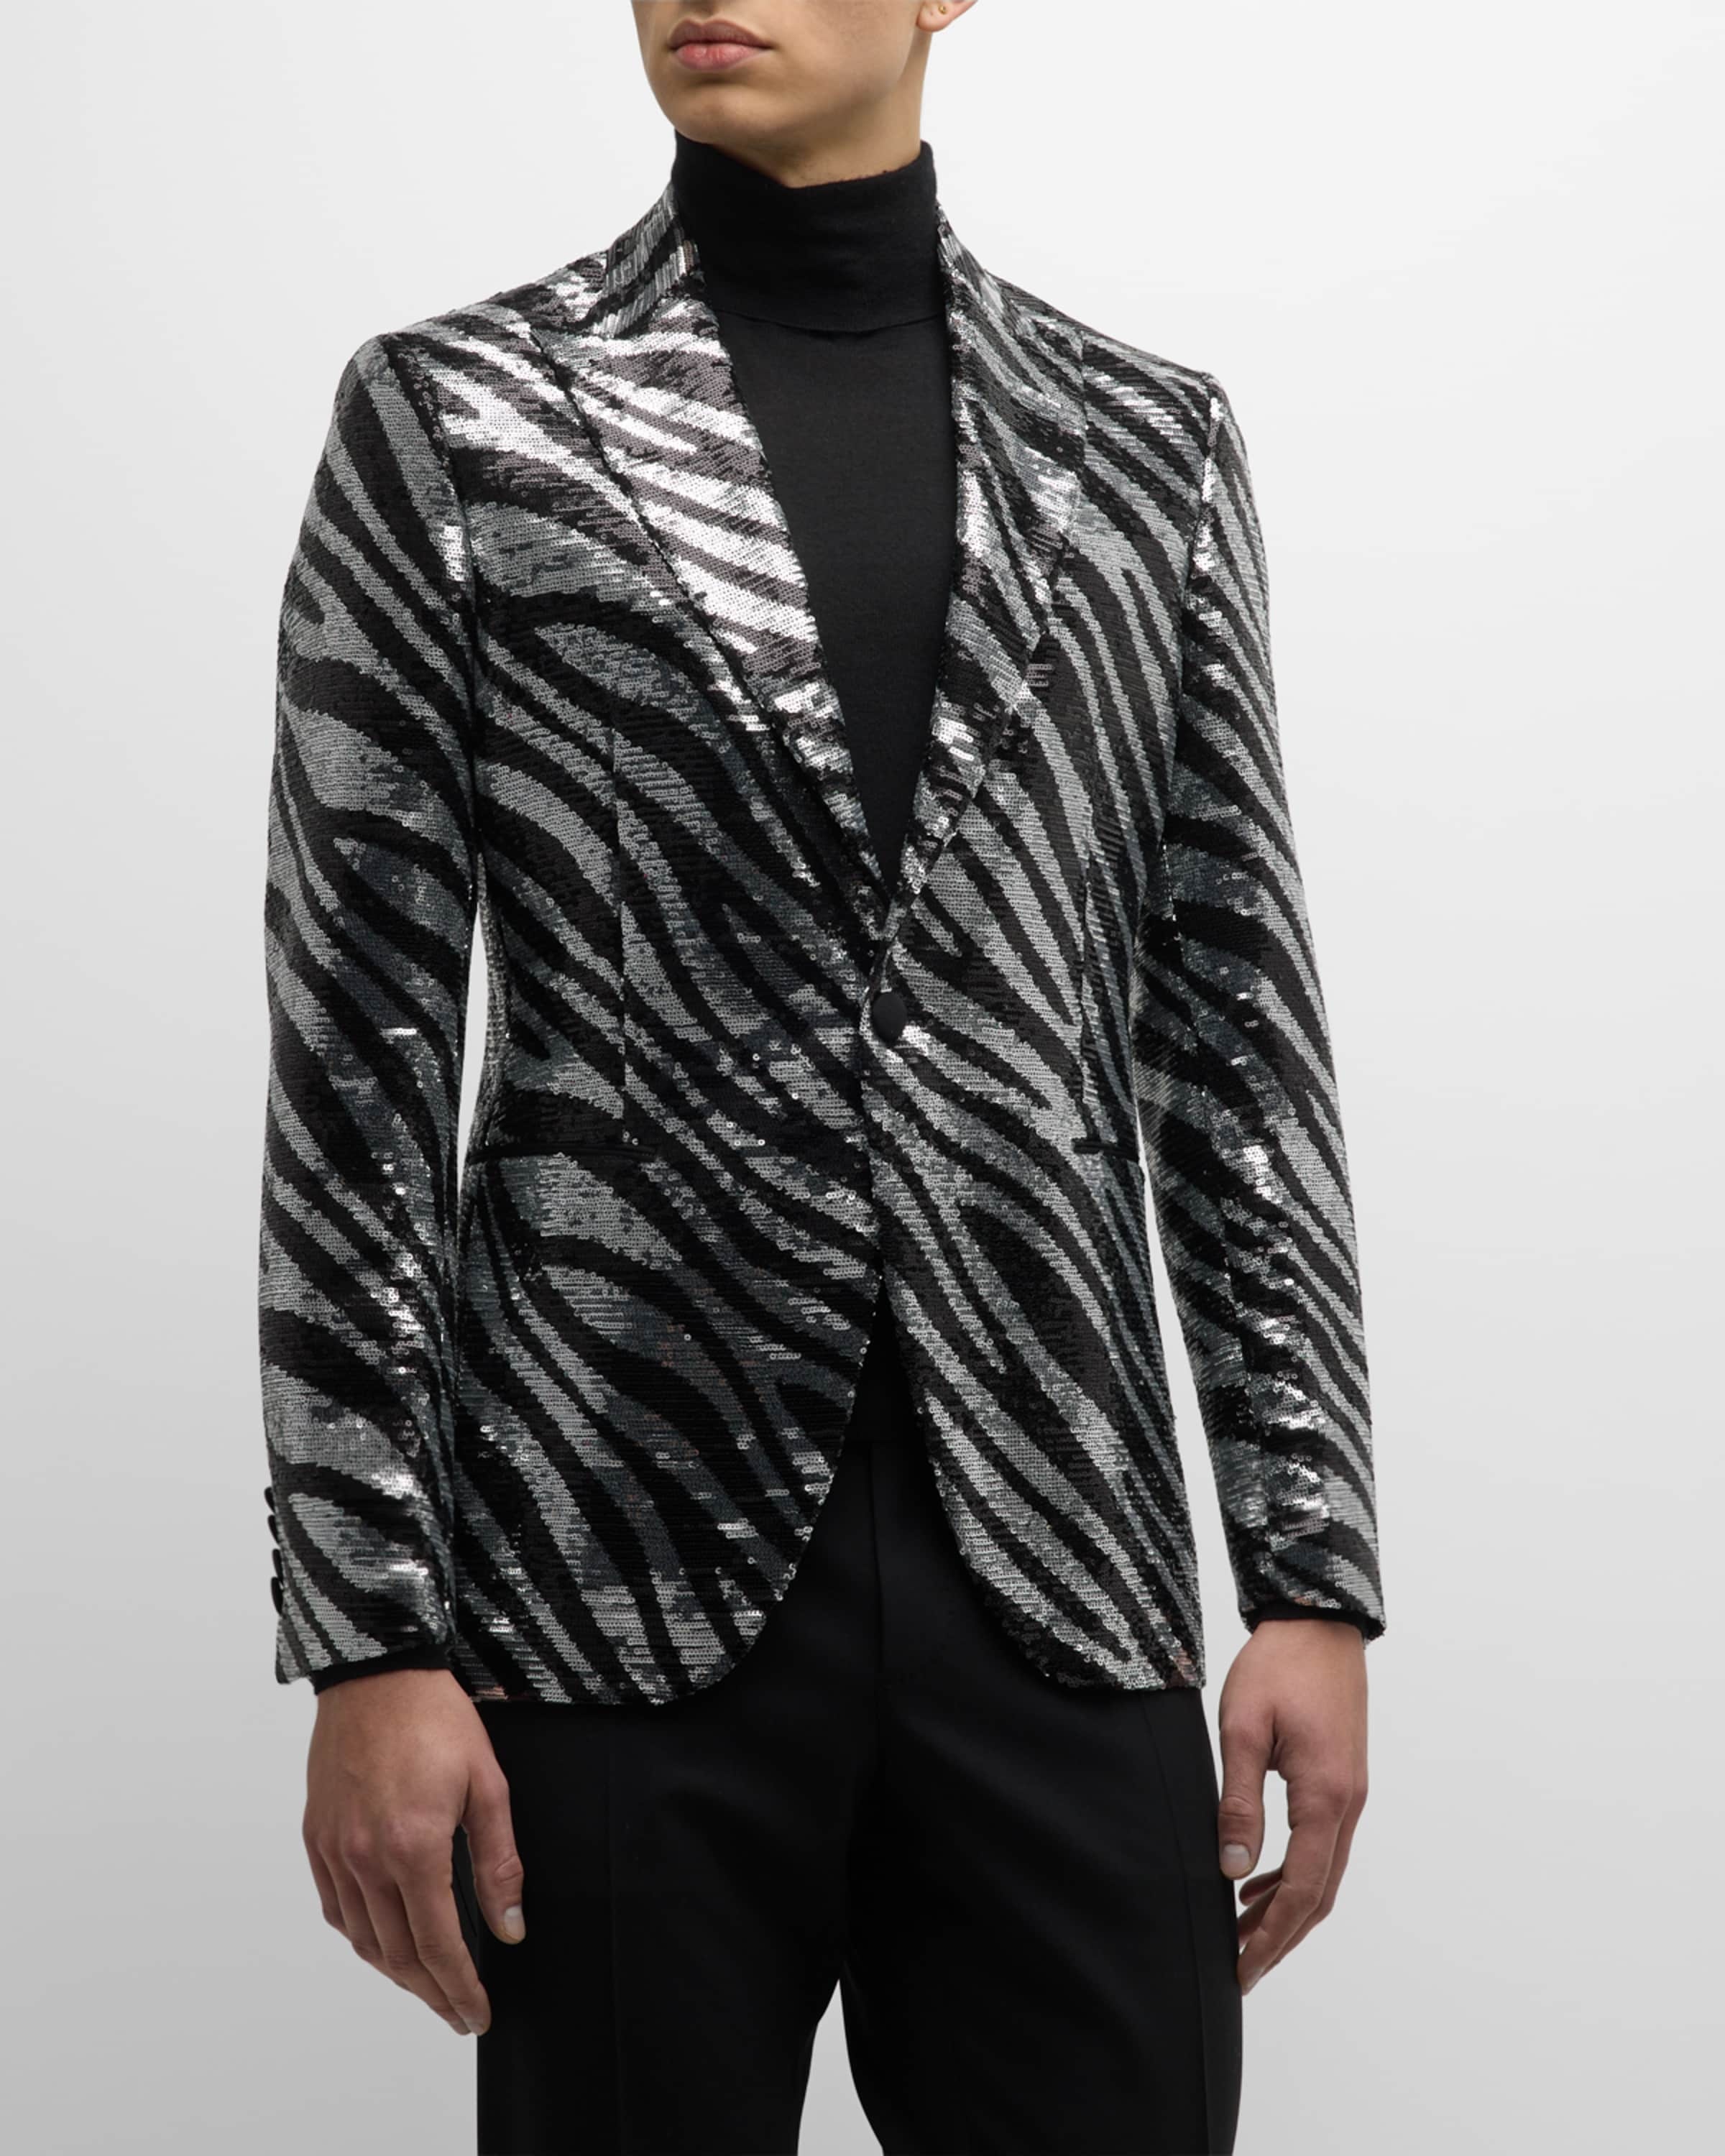 Men's Sequin Zebra Tuxedo Jacket - 1